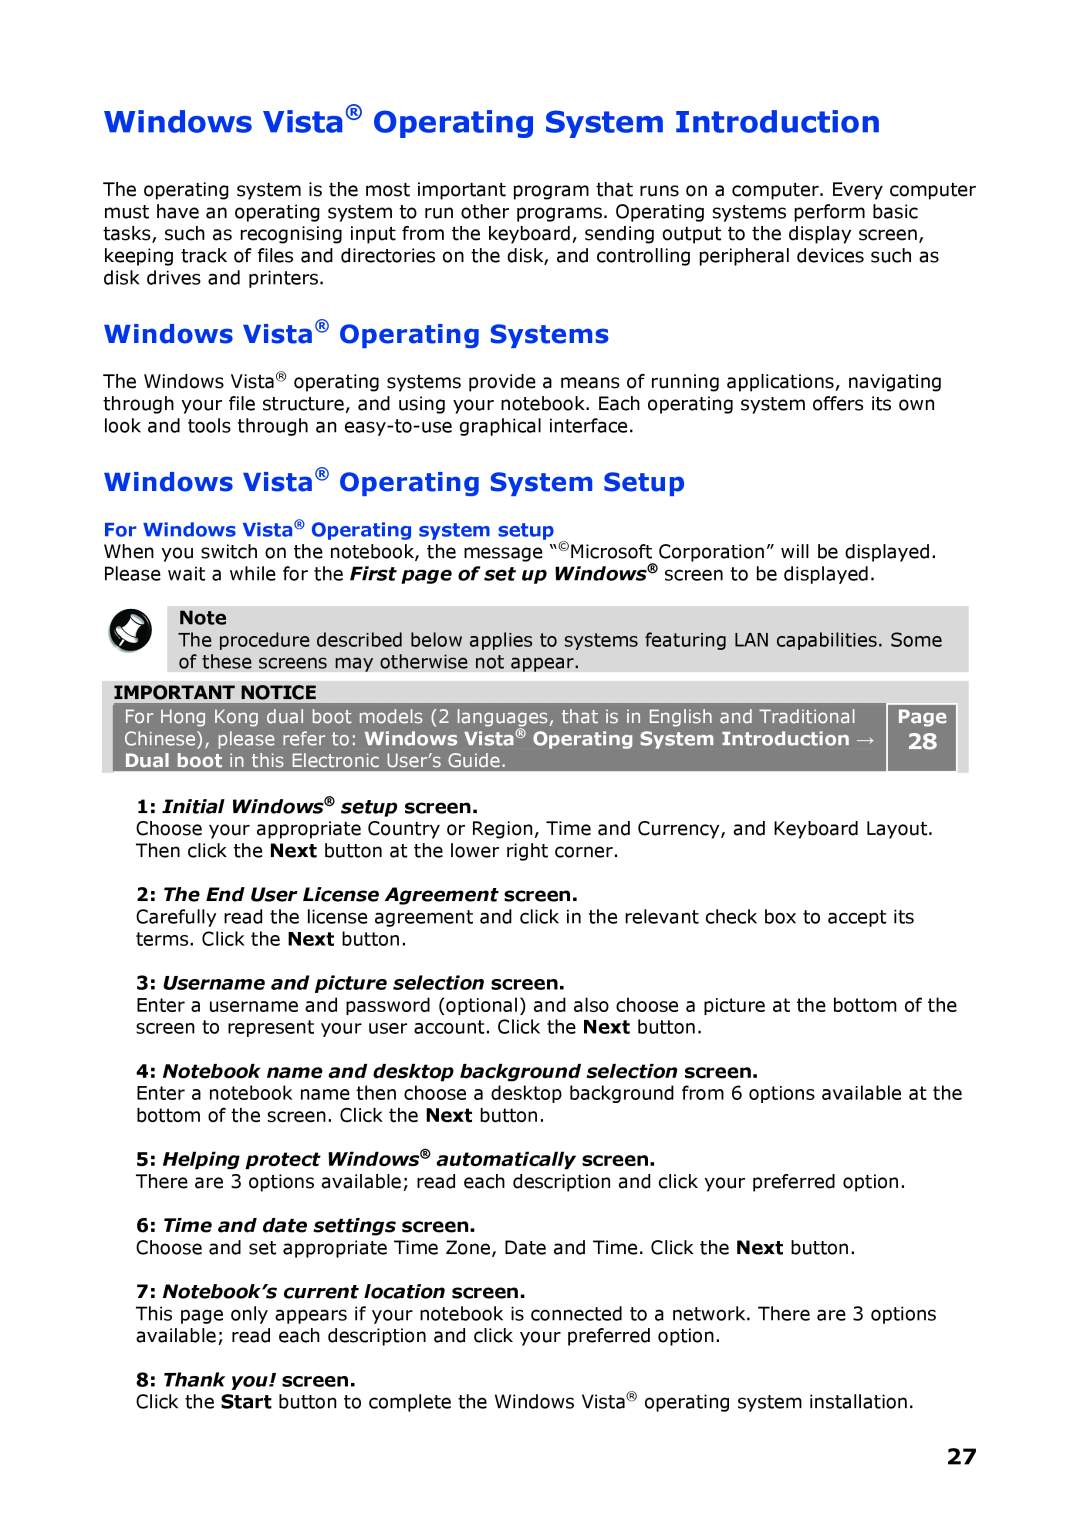 NEC P8510 manual Windows Vista Operating System Introduction, Windows Vista Operating Systems, Important Notice, Page 